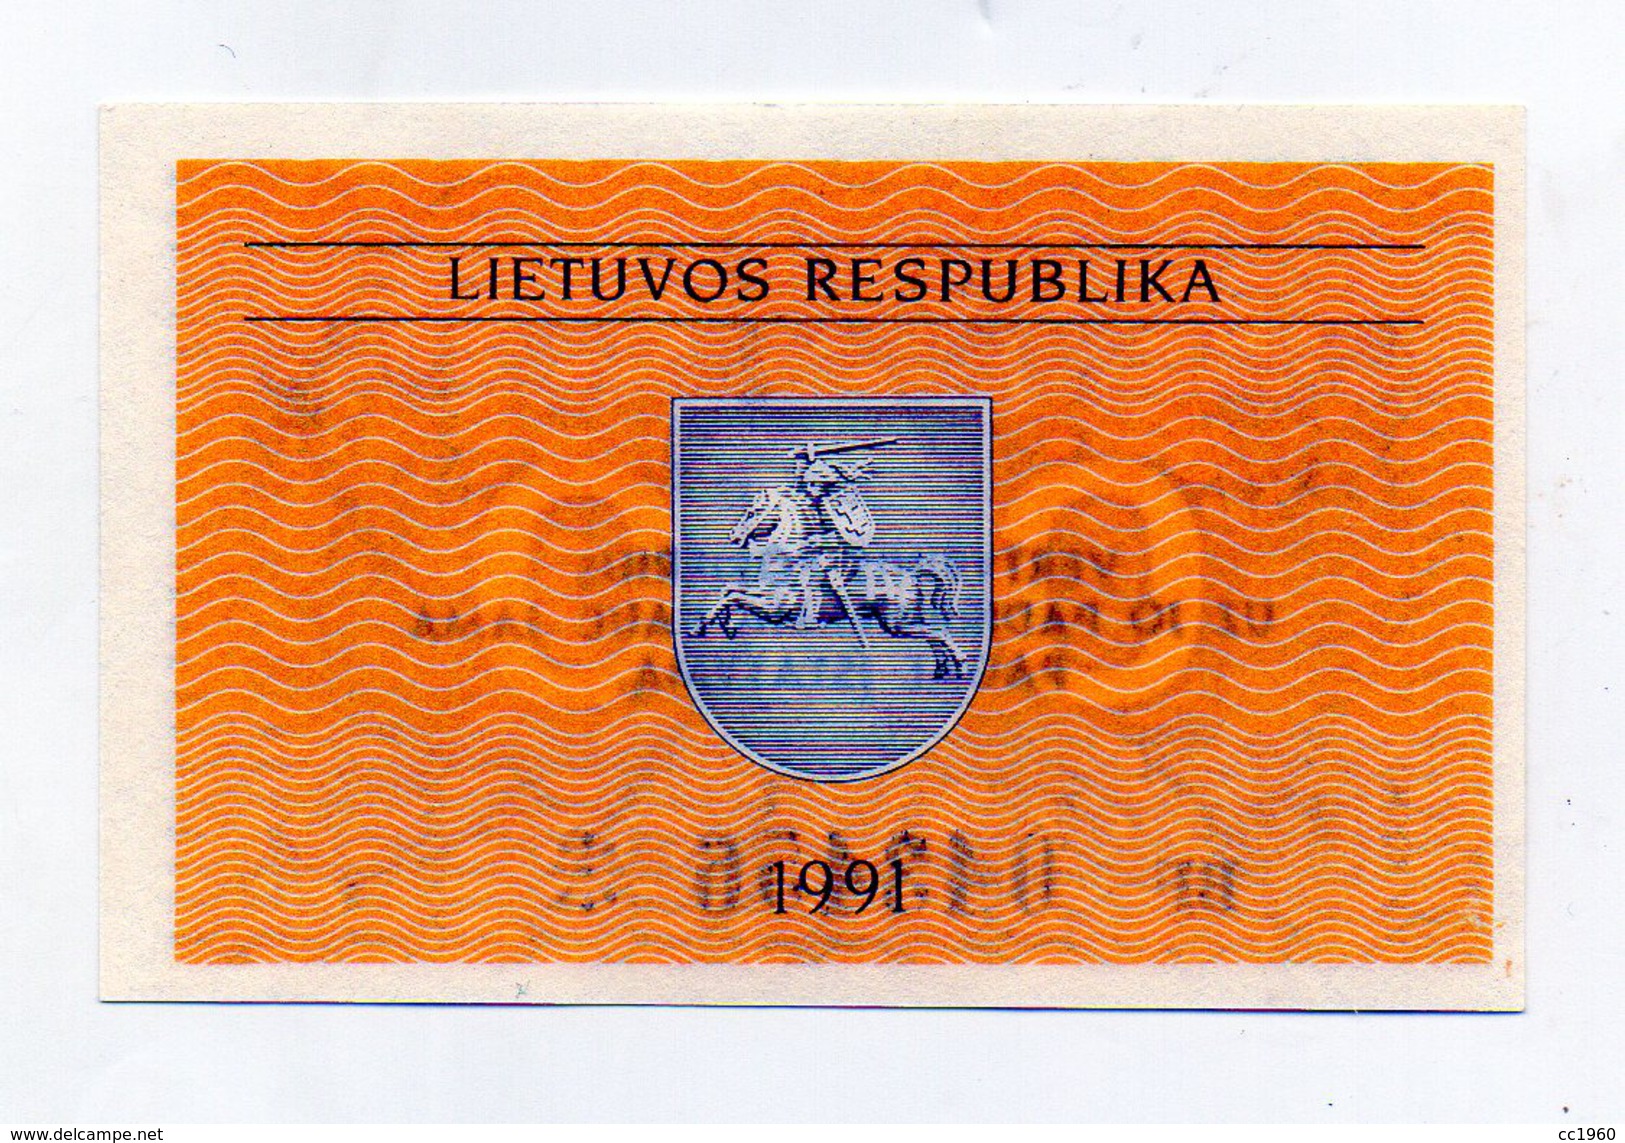 Lituania - 1991 - Banconota Da 0,10 Talonas - Nuova -  (FDC1614) - Lithuania